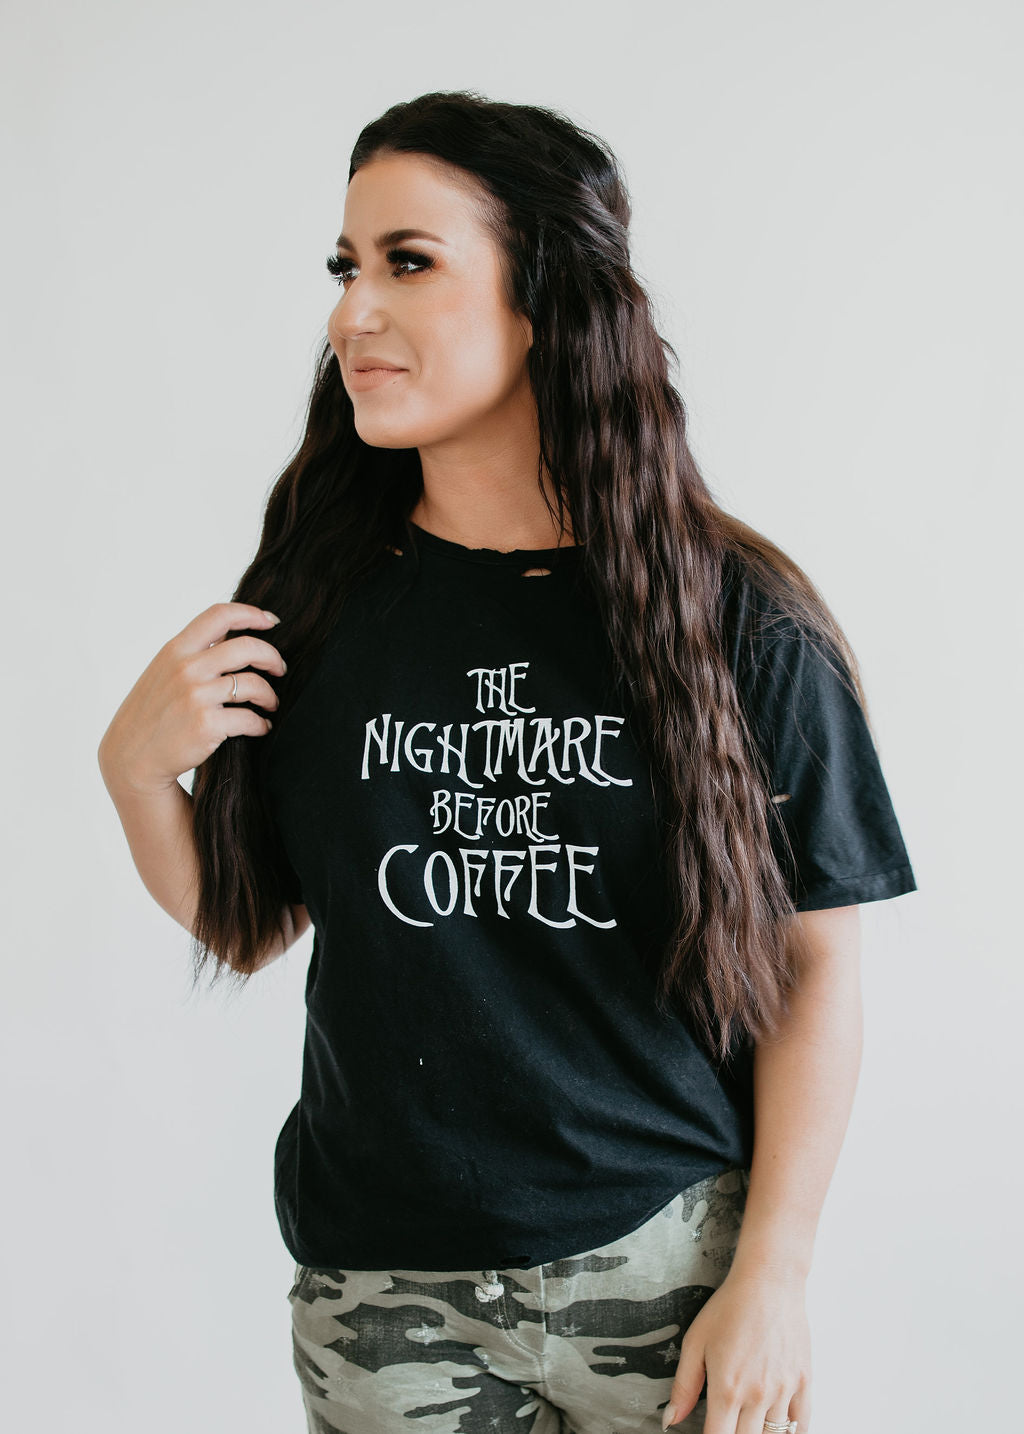 Nightmare Before Coffee Graphic Tee